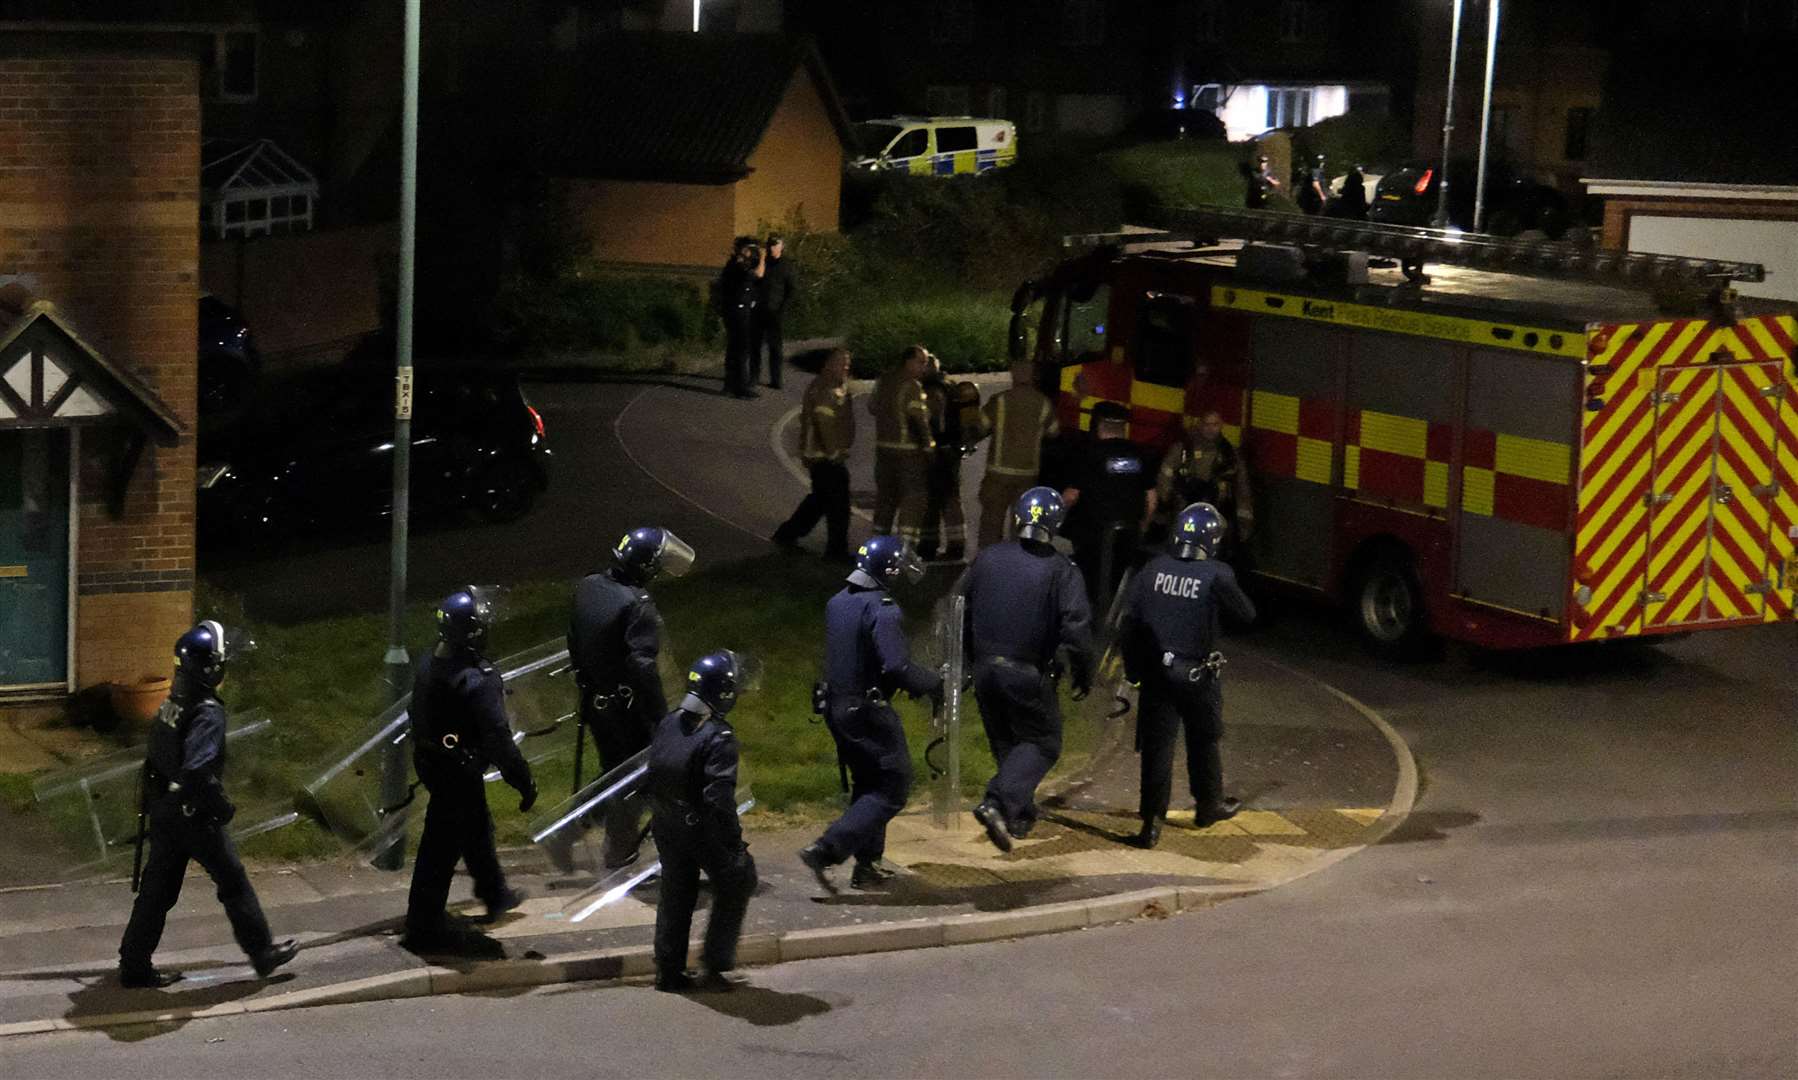 Police in riot gear in Burrstock Way, Rainham. Picture: Robin Halls